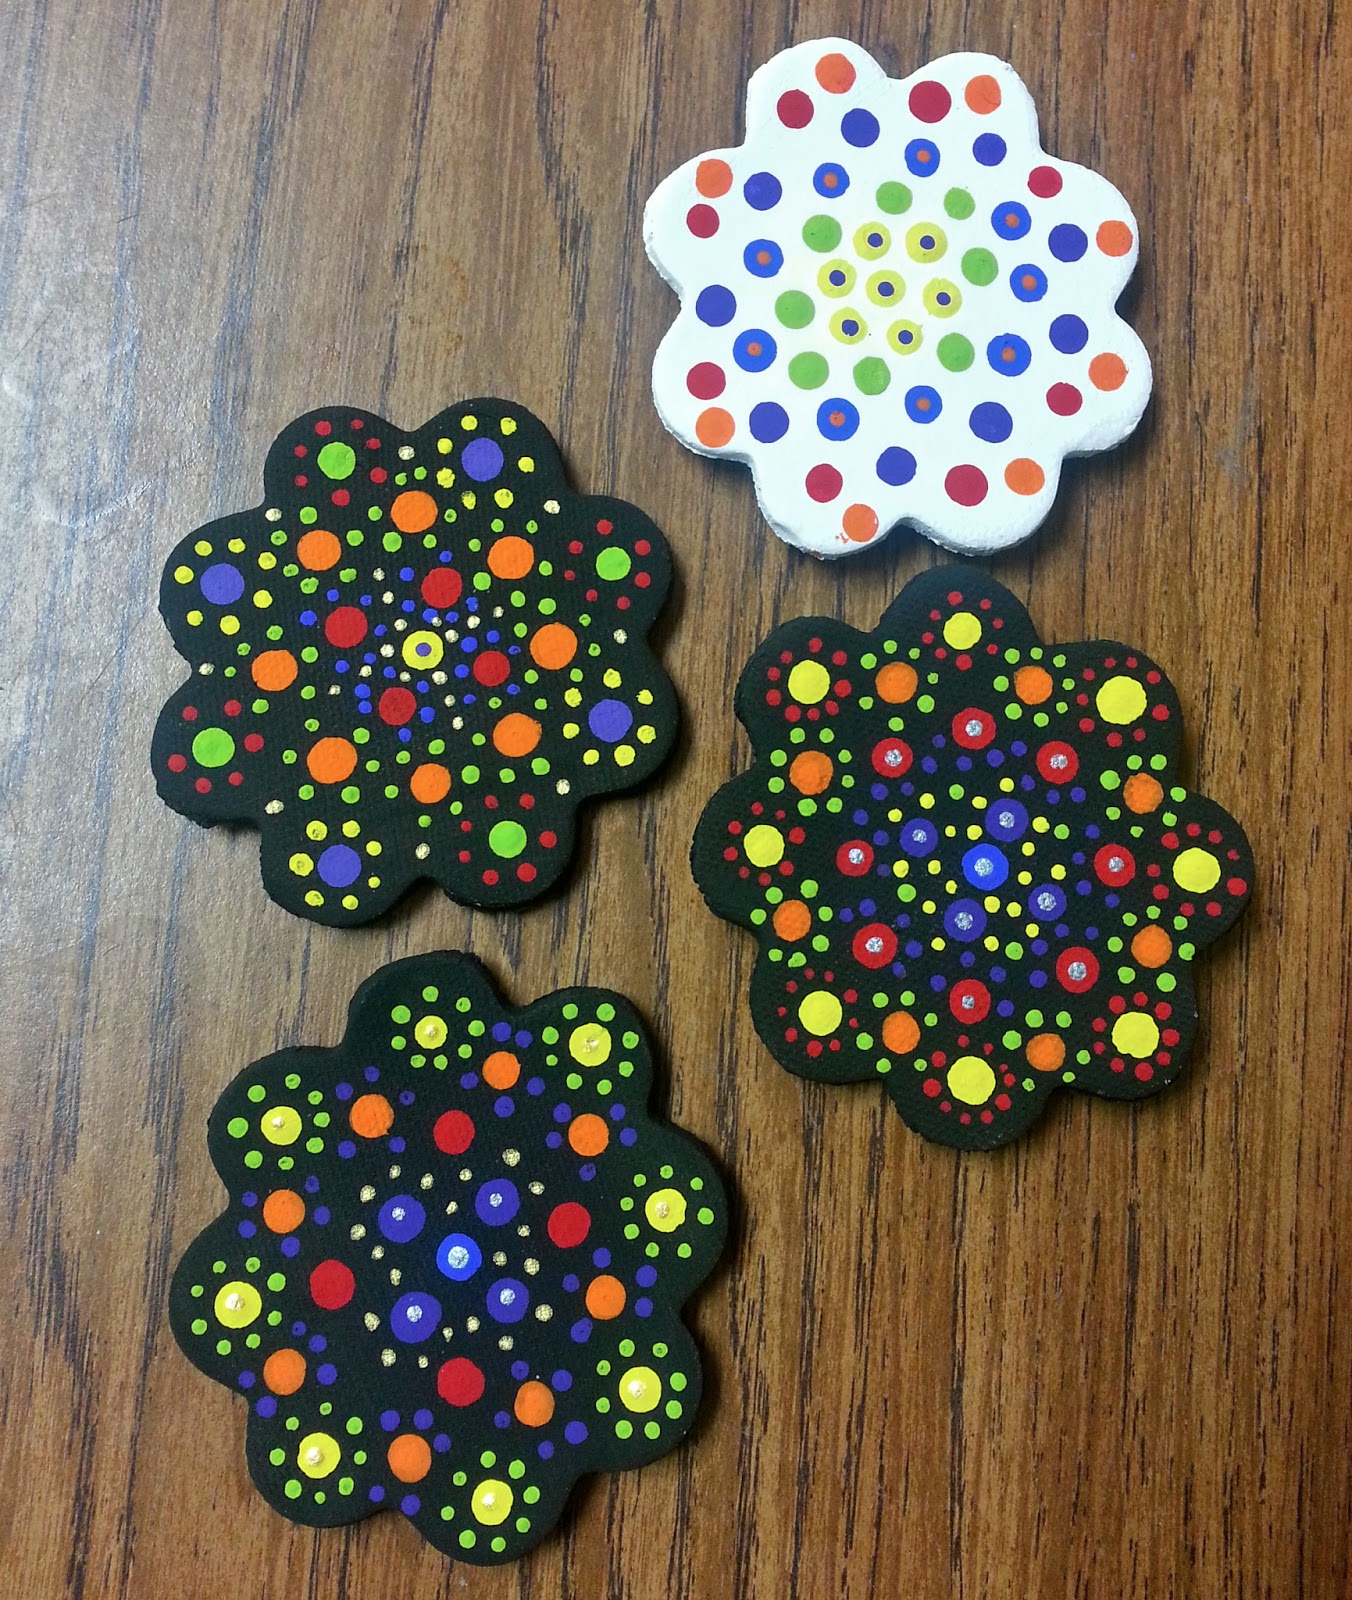 Australian Dot Art Clay Magnets